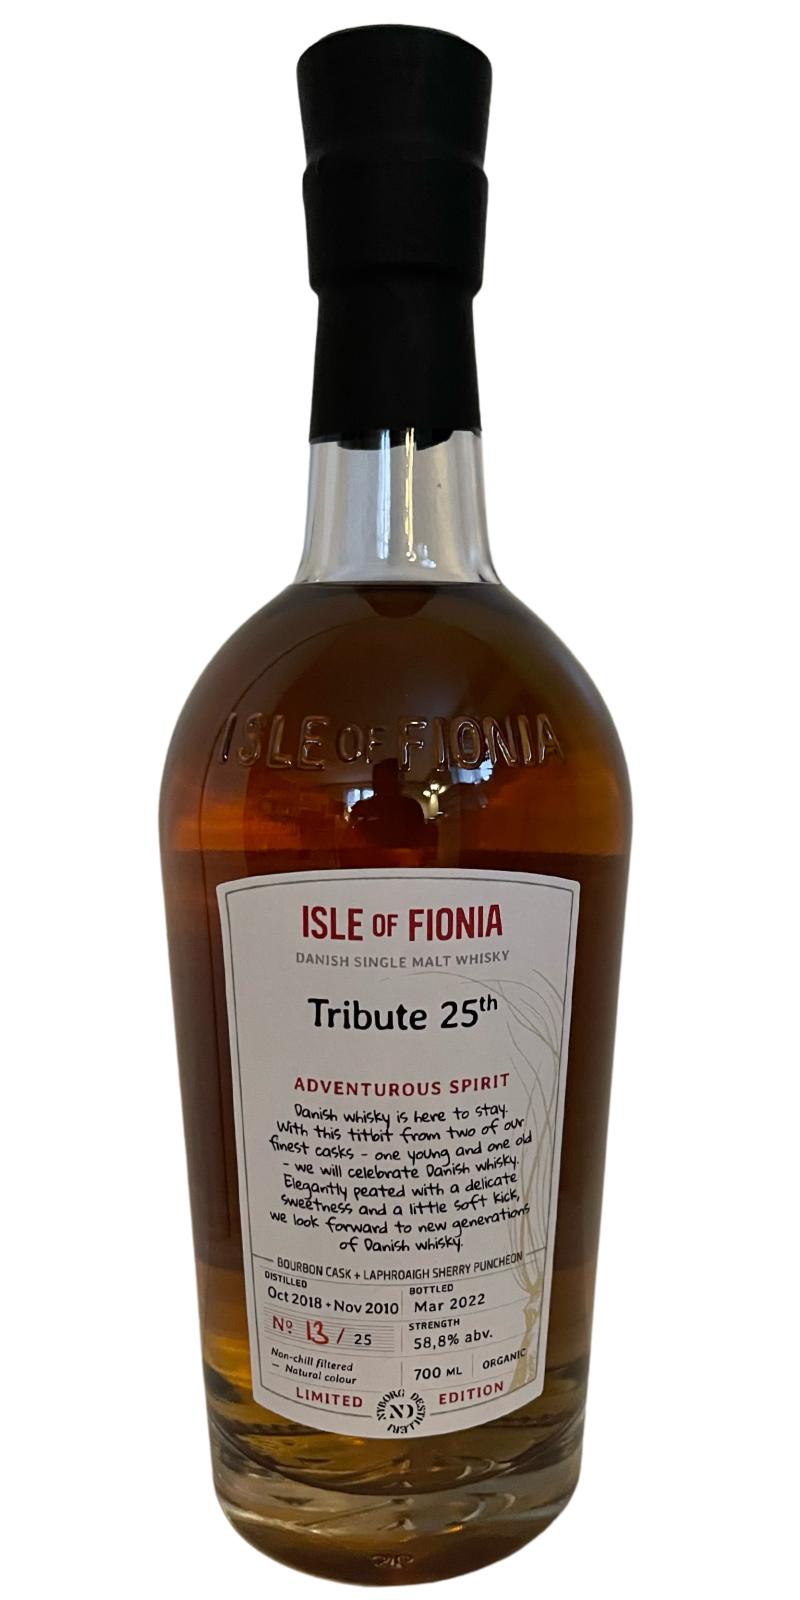 Isle of Fionia Tribute 25th Adventurous Spirit Bourbon + Laphroaig sherry puncheon 58.8% 700ml